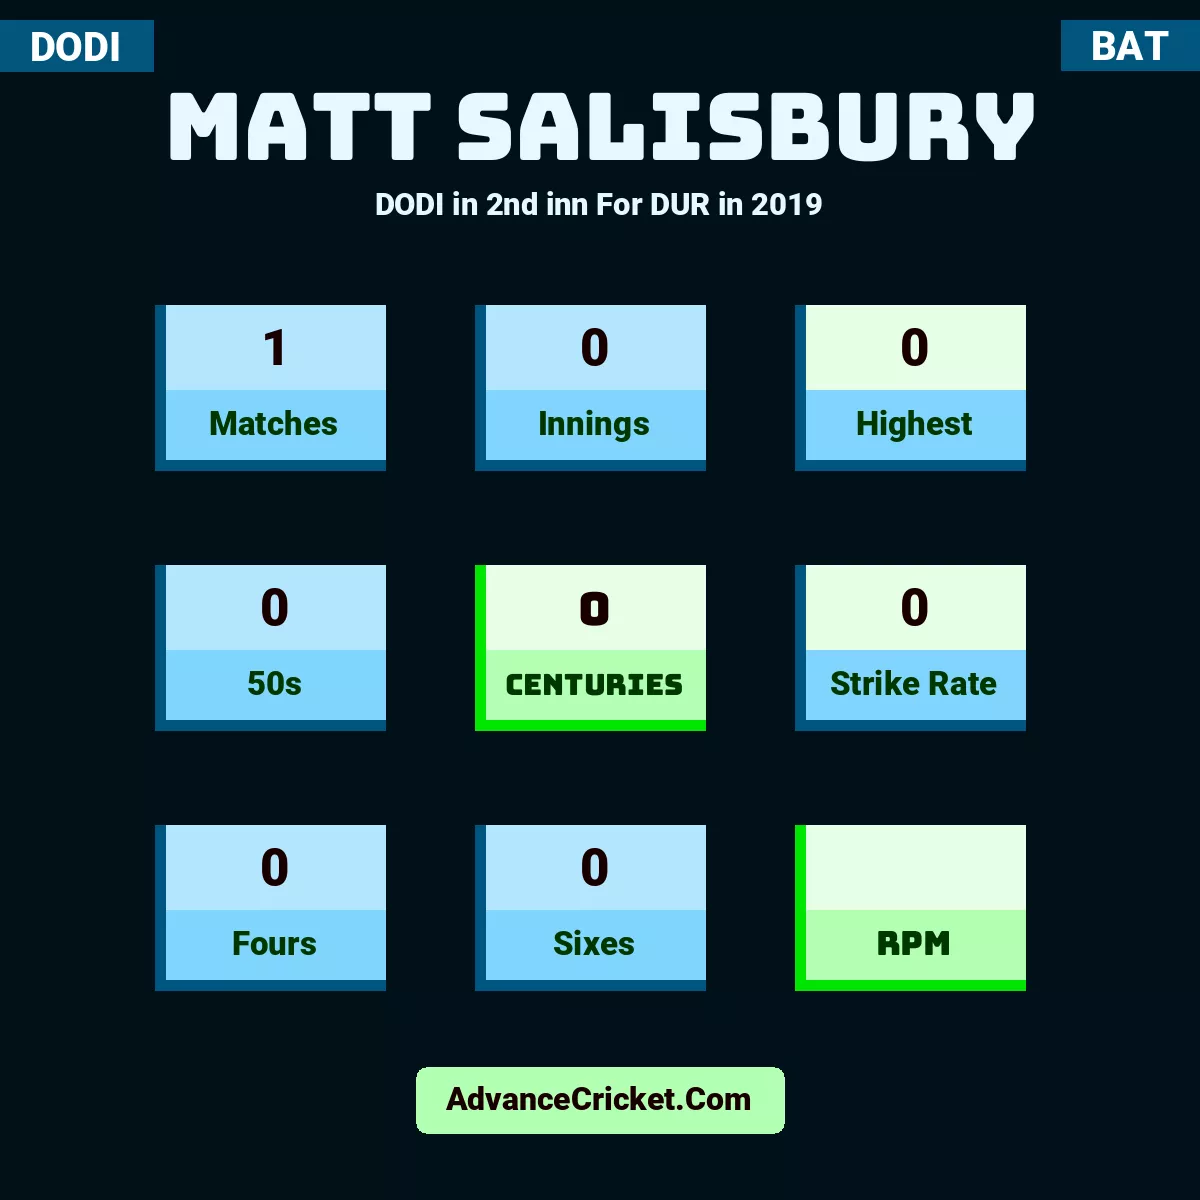 Matt Salisbury DODI  in 2nd inn For DUR in 2019, Matt Salisbury played 1 matches, scored 0 runs as highest, 0 half-centuries, and 0 centuries, with a strike rate of 0. M.Salisbury hit 0 fours and 0 sixes.